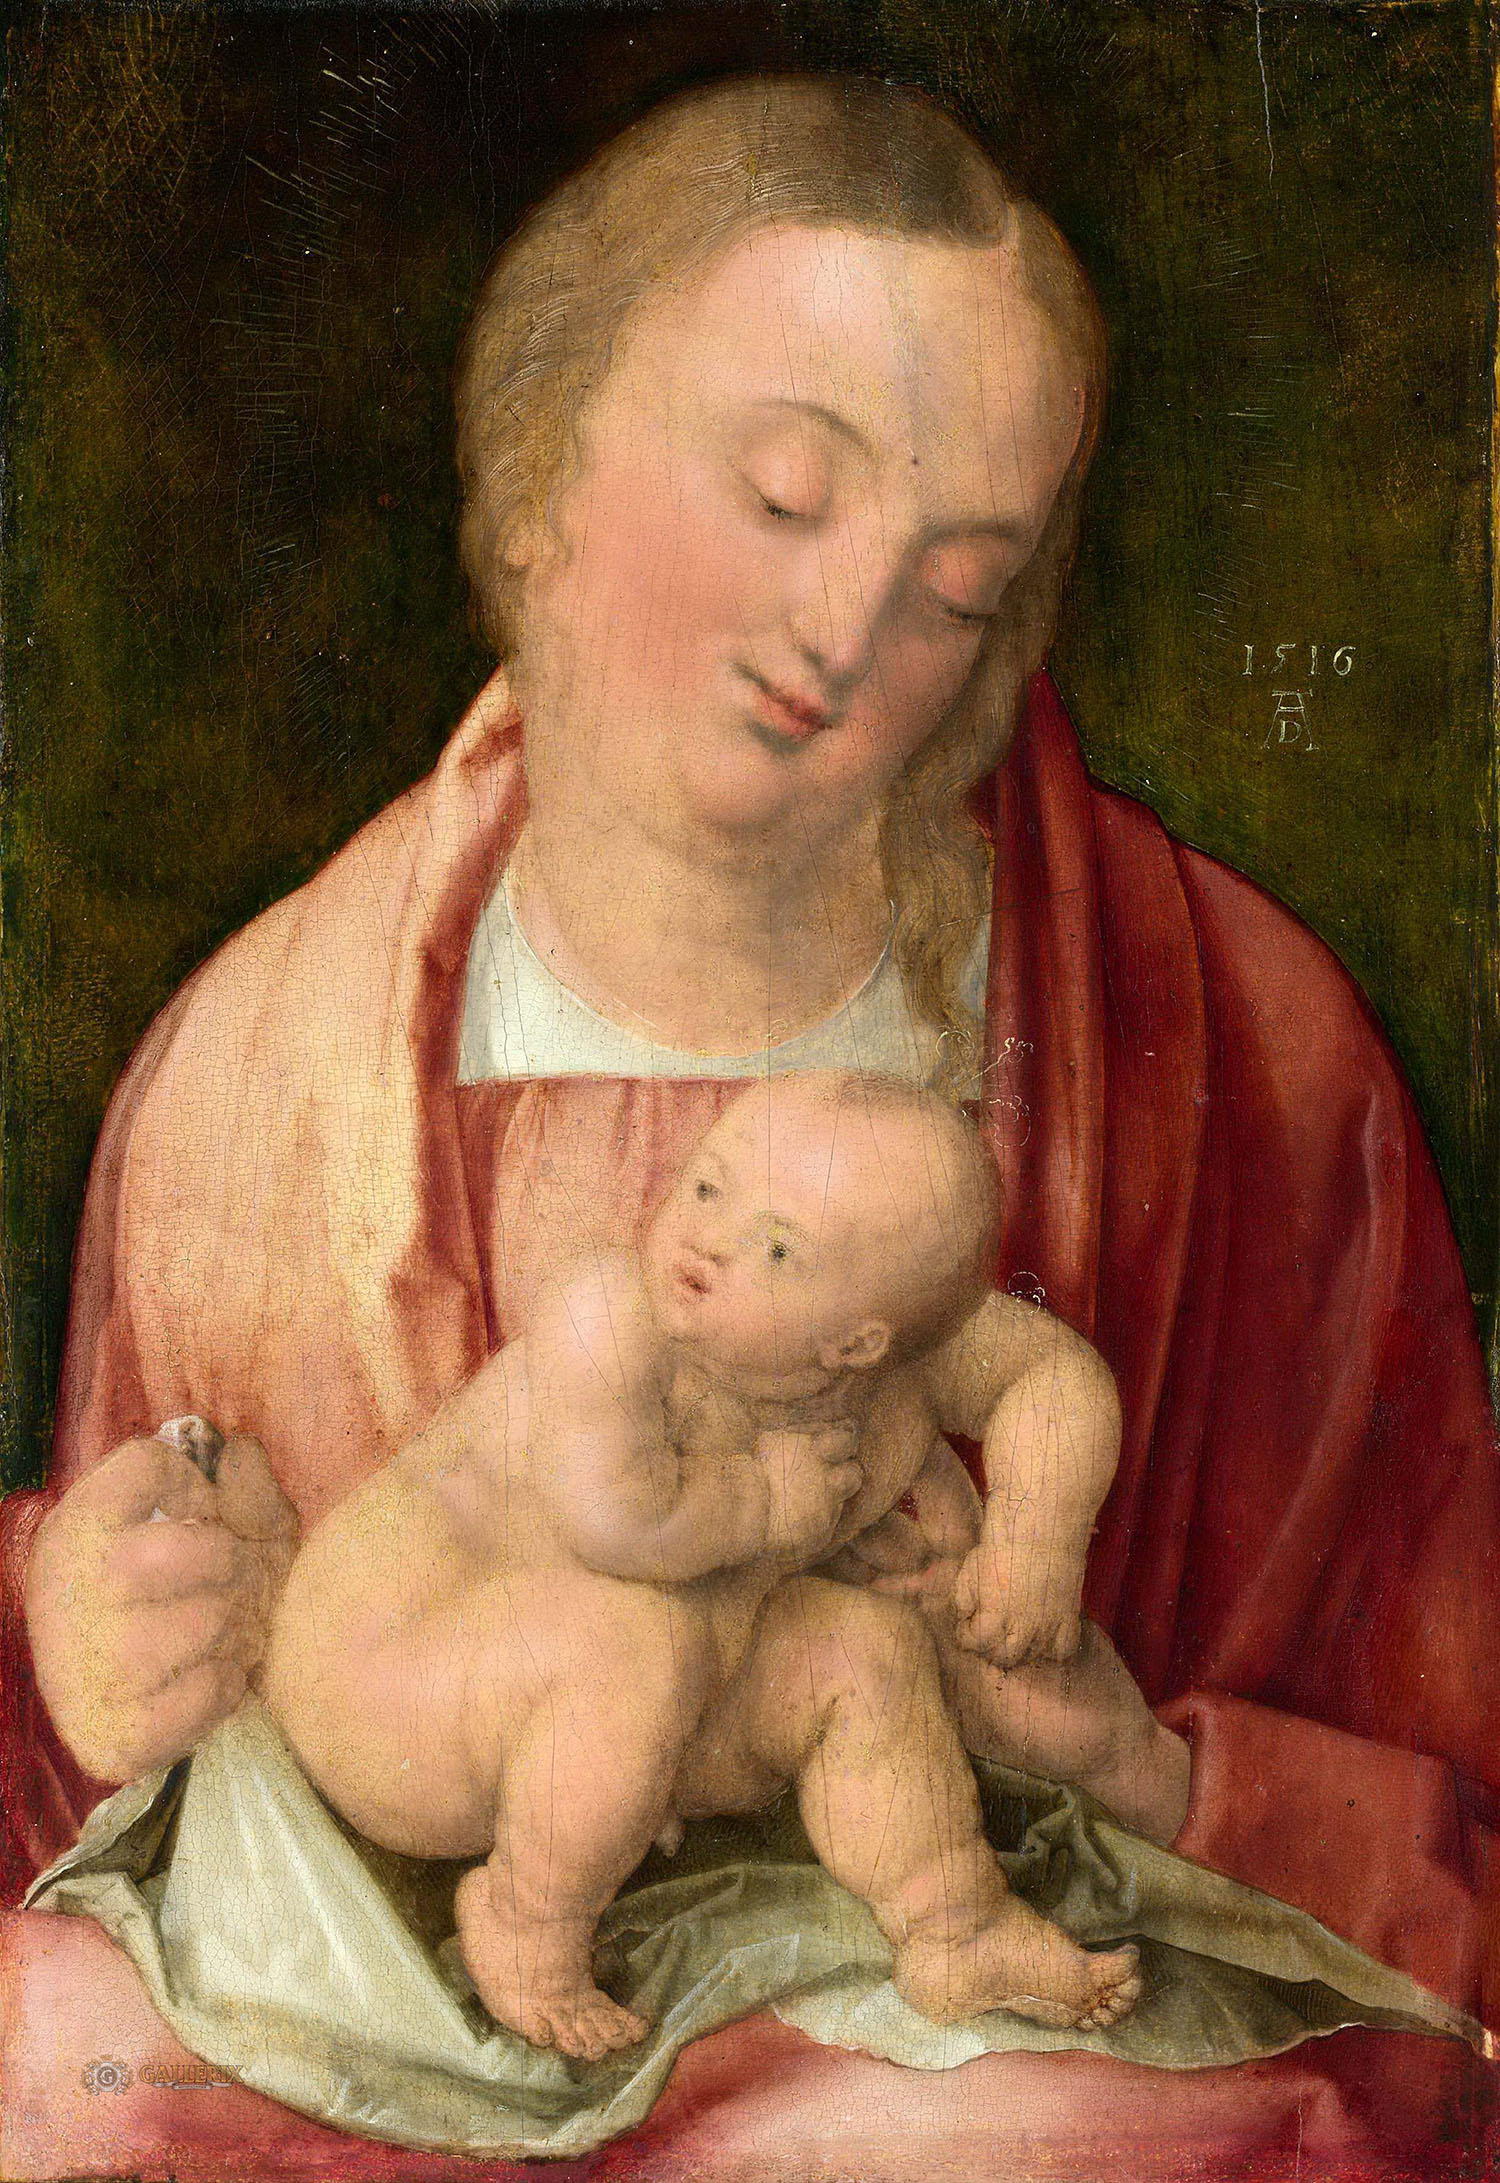 Альбрехт Дюрер. "Мадонна с Младенцем". 1516. Музей Метрополитен, Нью-Йорк.